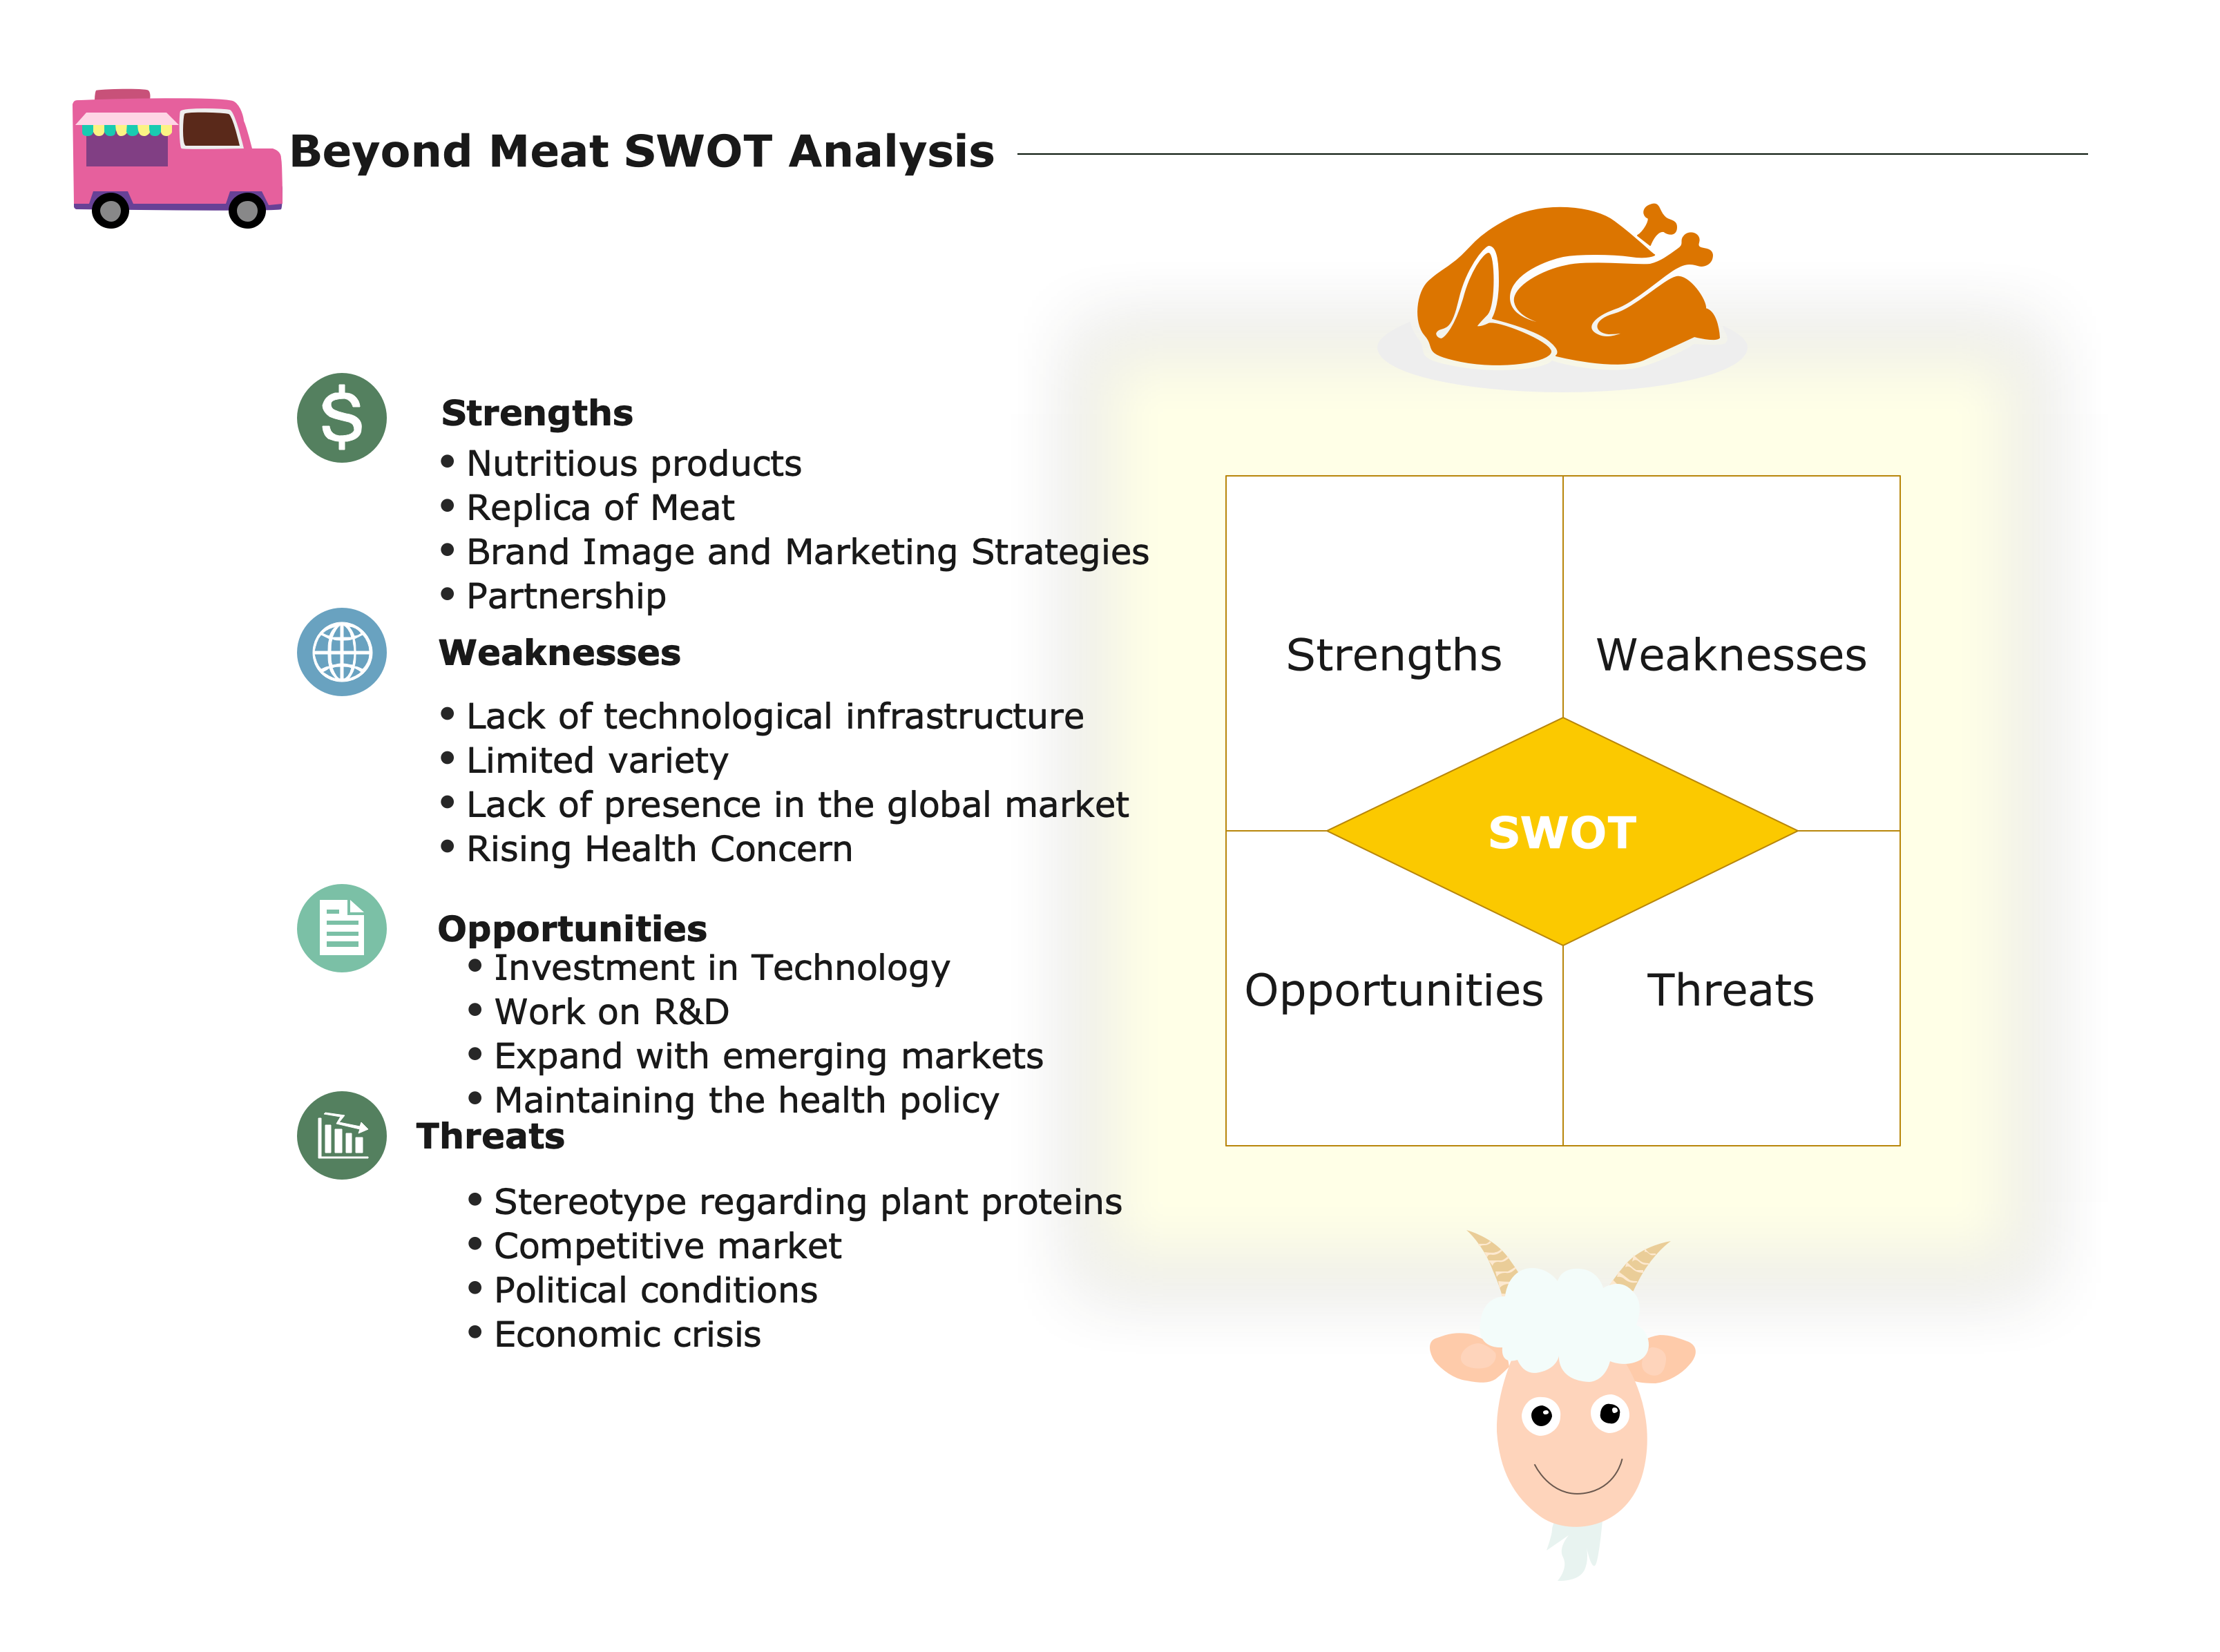 Beyond Meat's SWOT Analysis Diagram